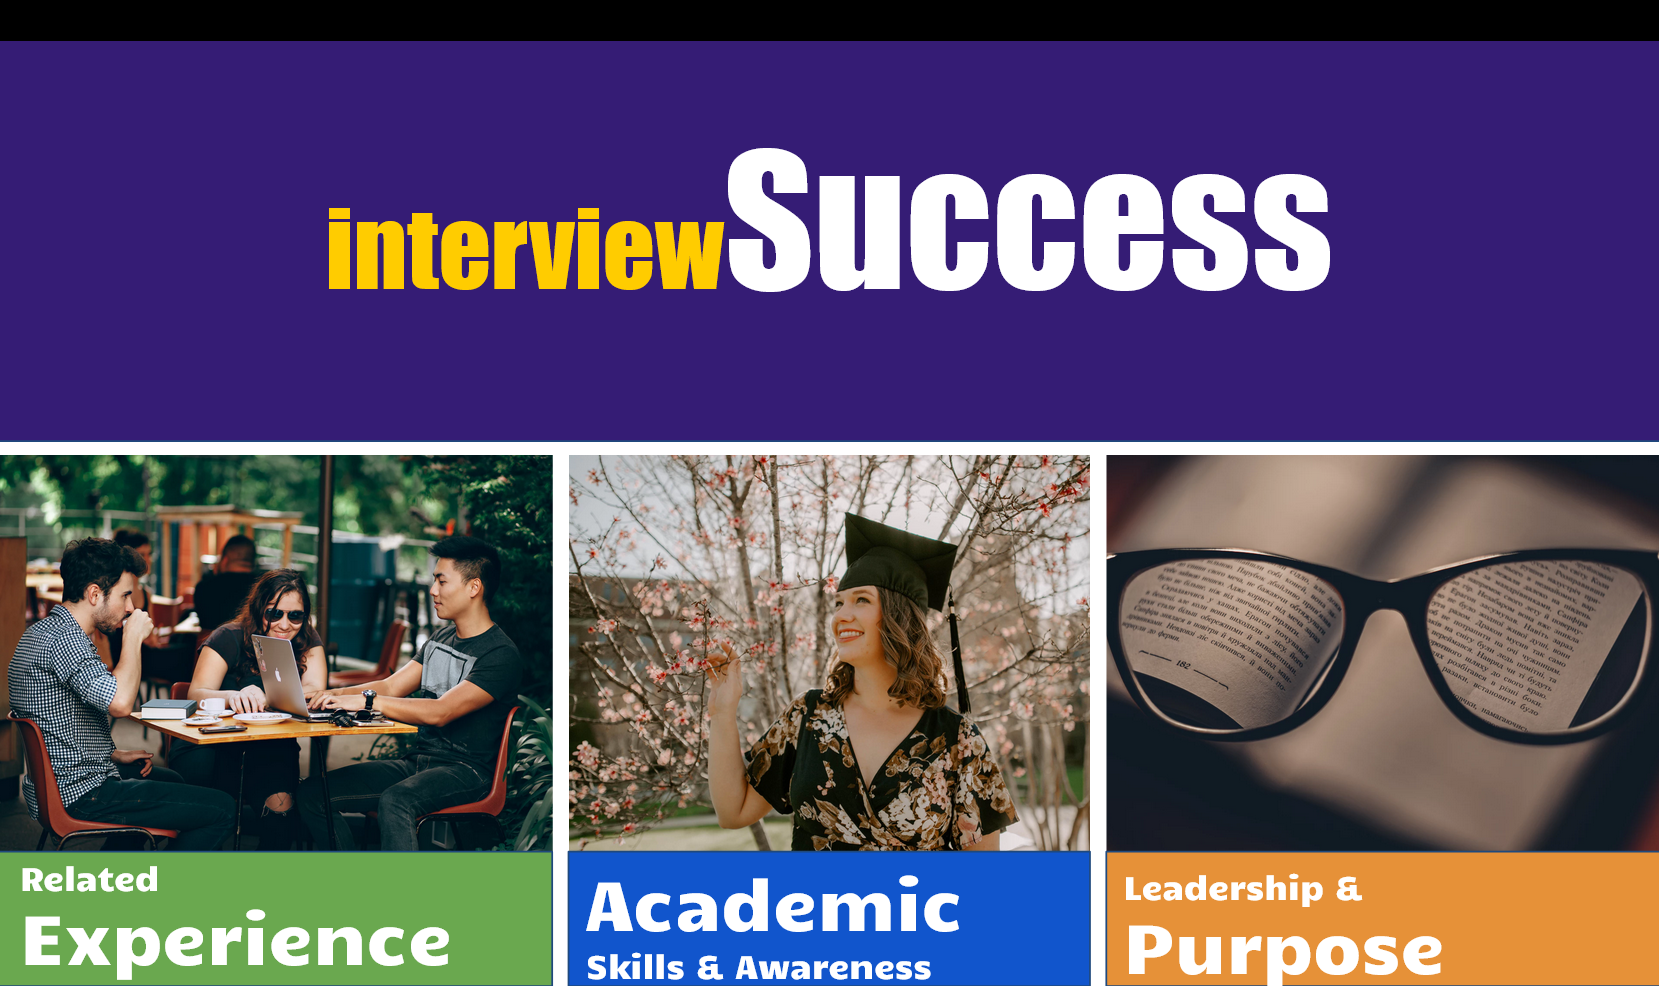 interview success